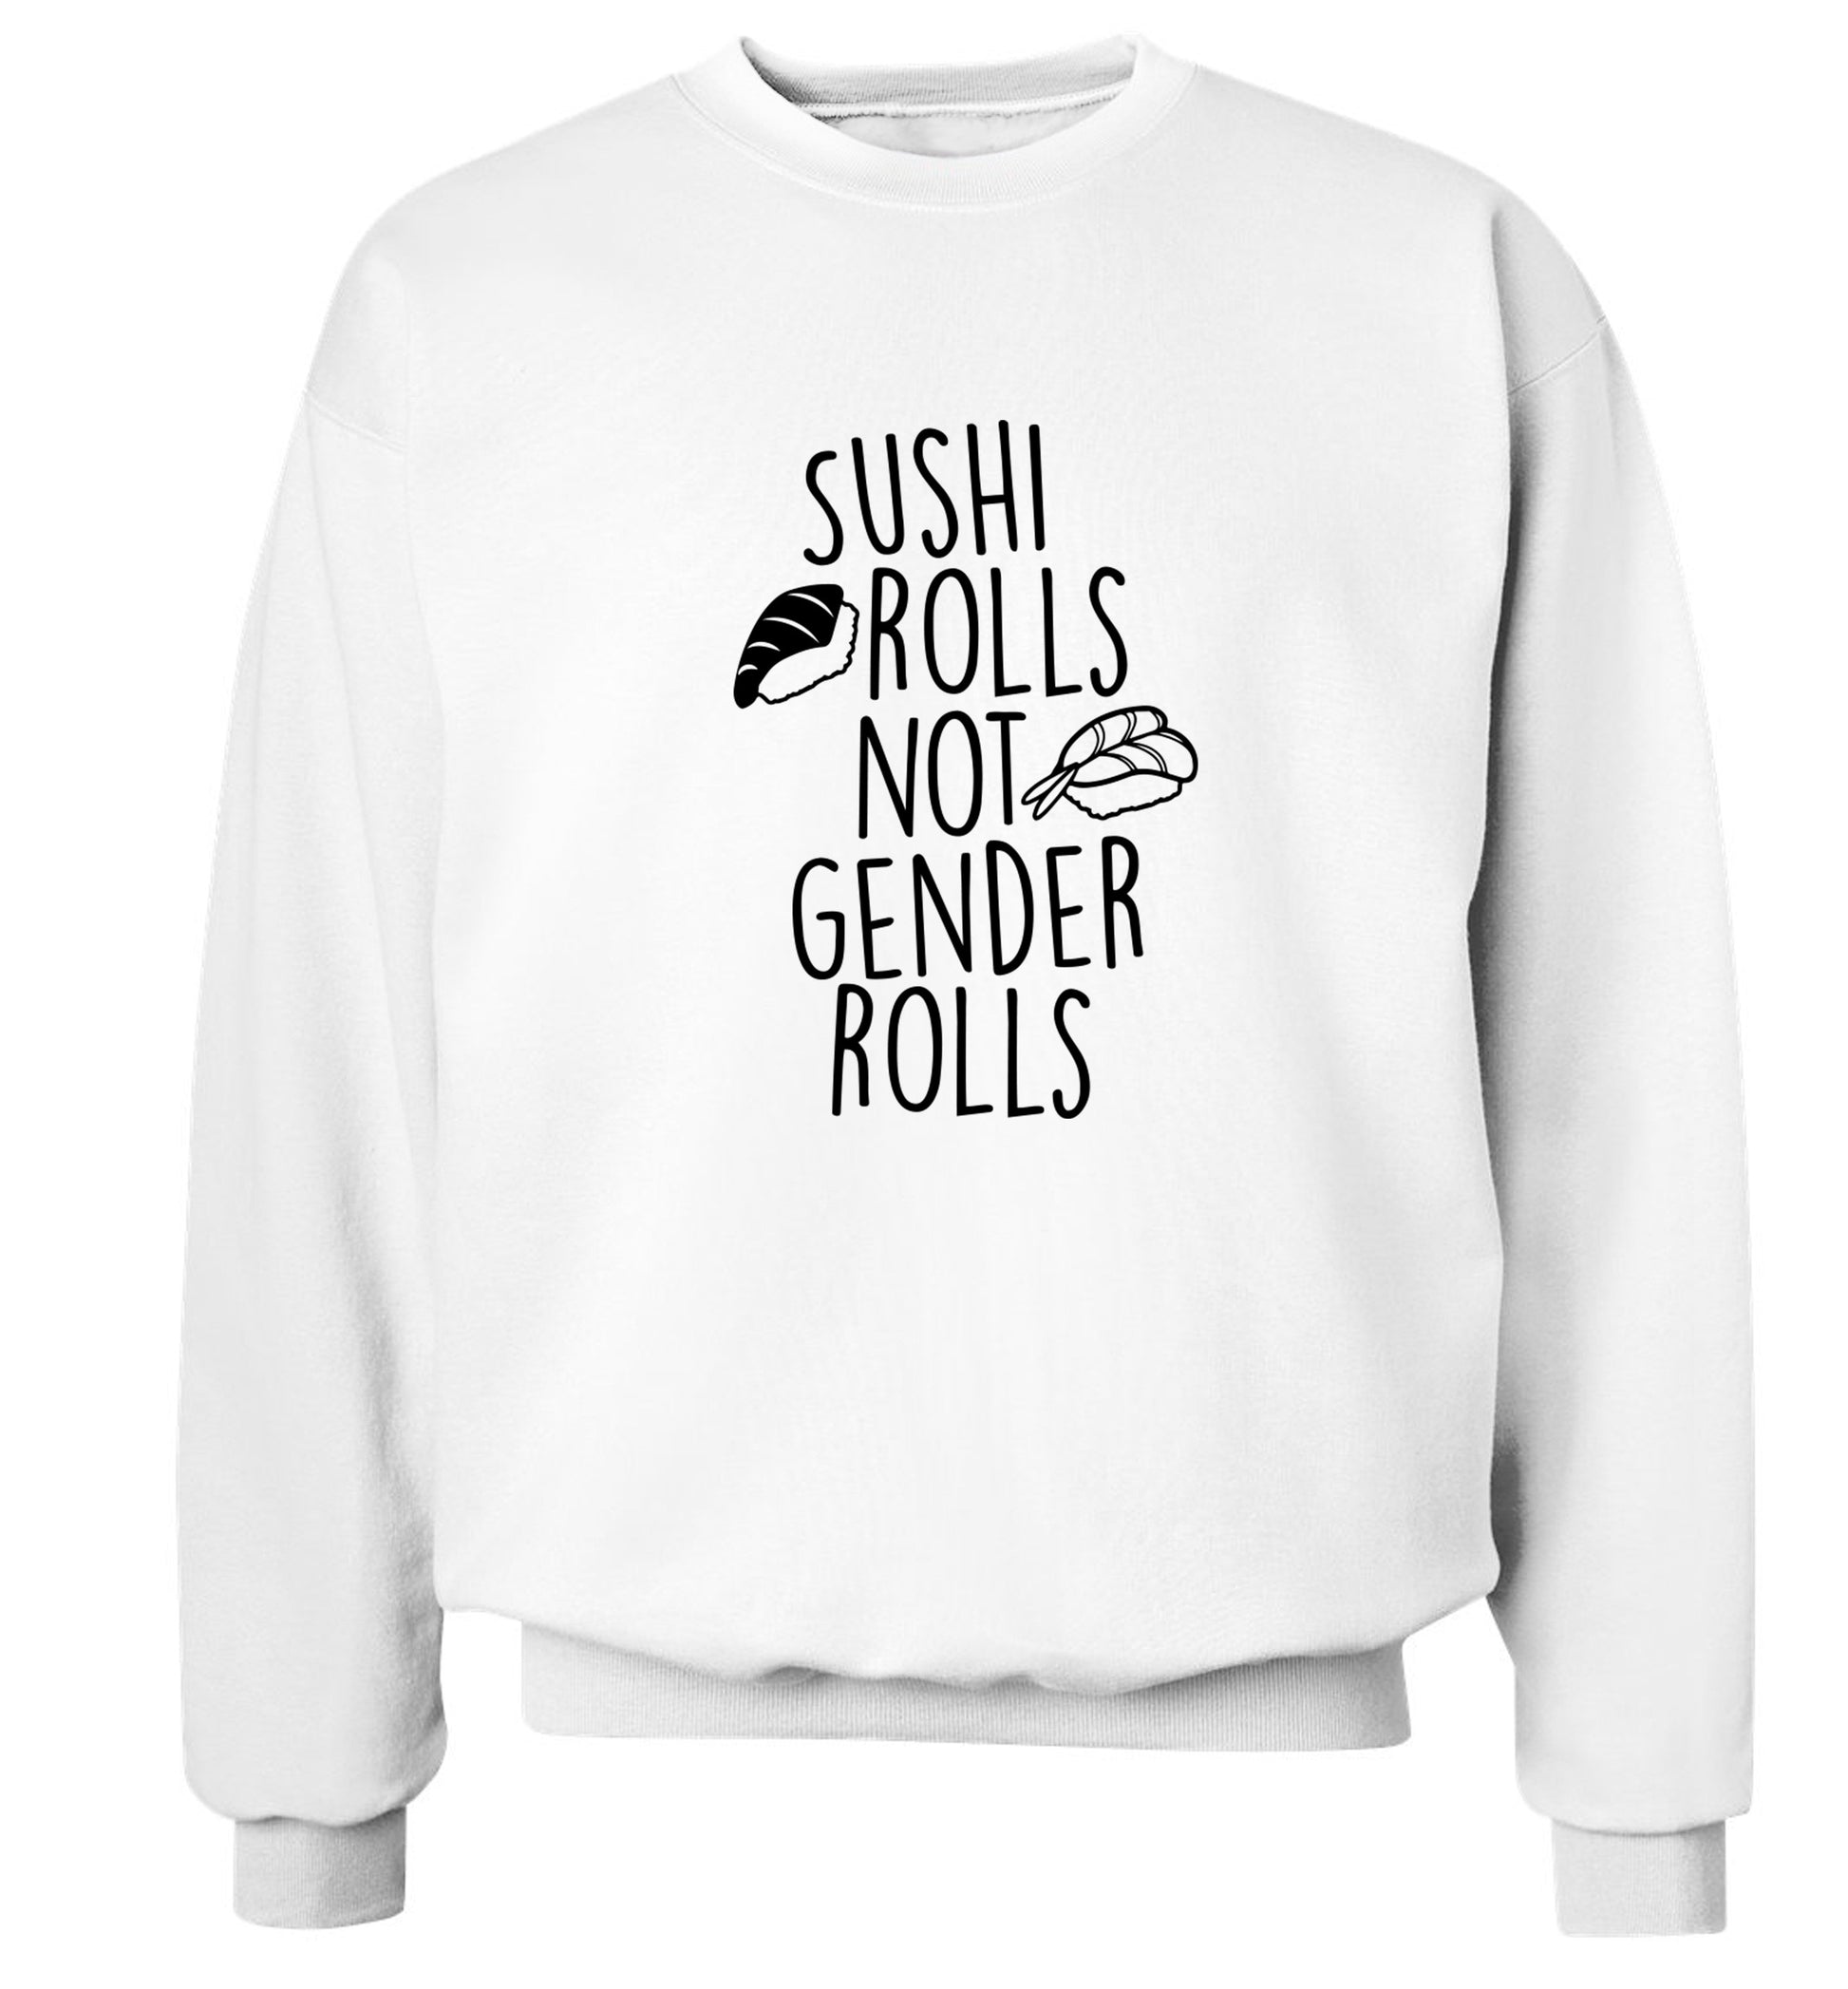 Sushi rolls not gender rolls Adult's unisex white Sweater 2XL